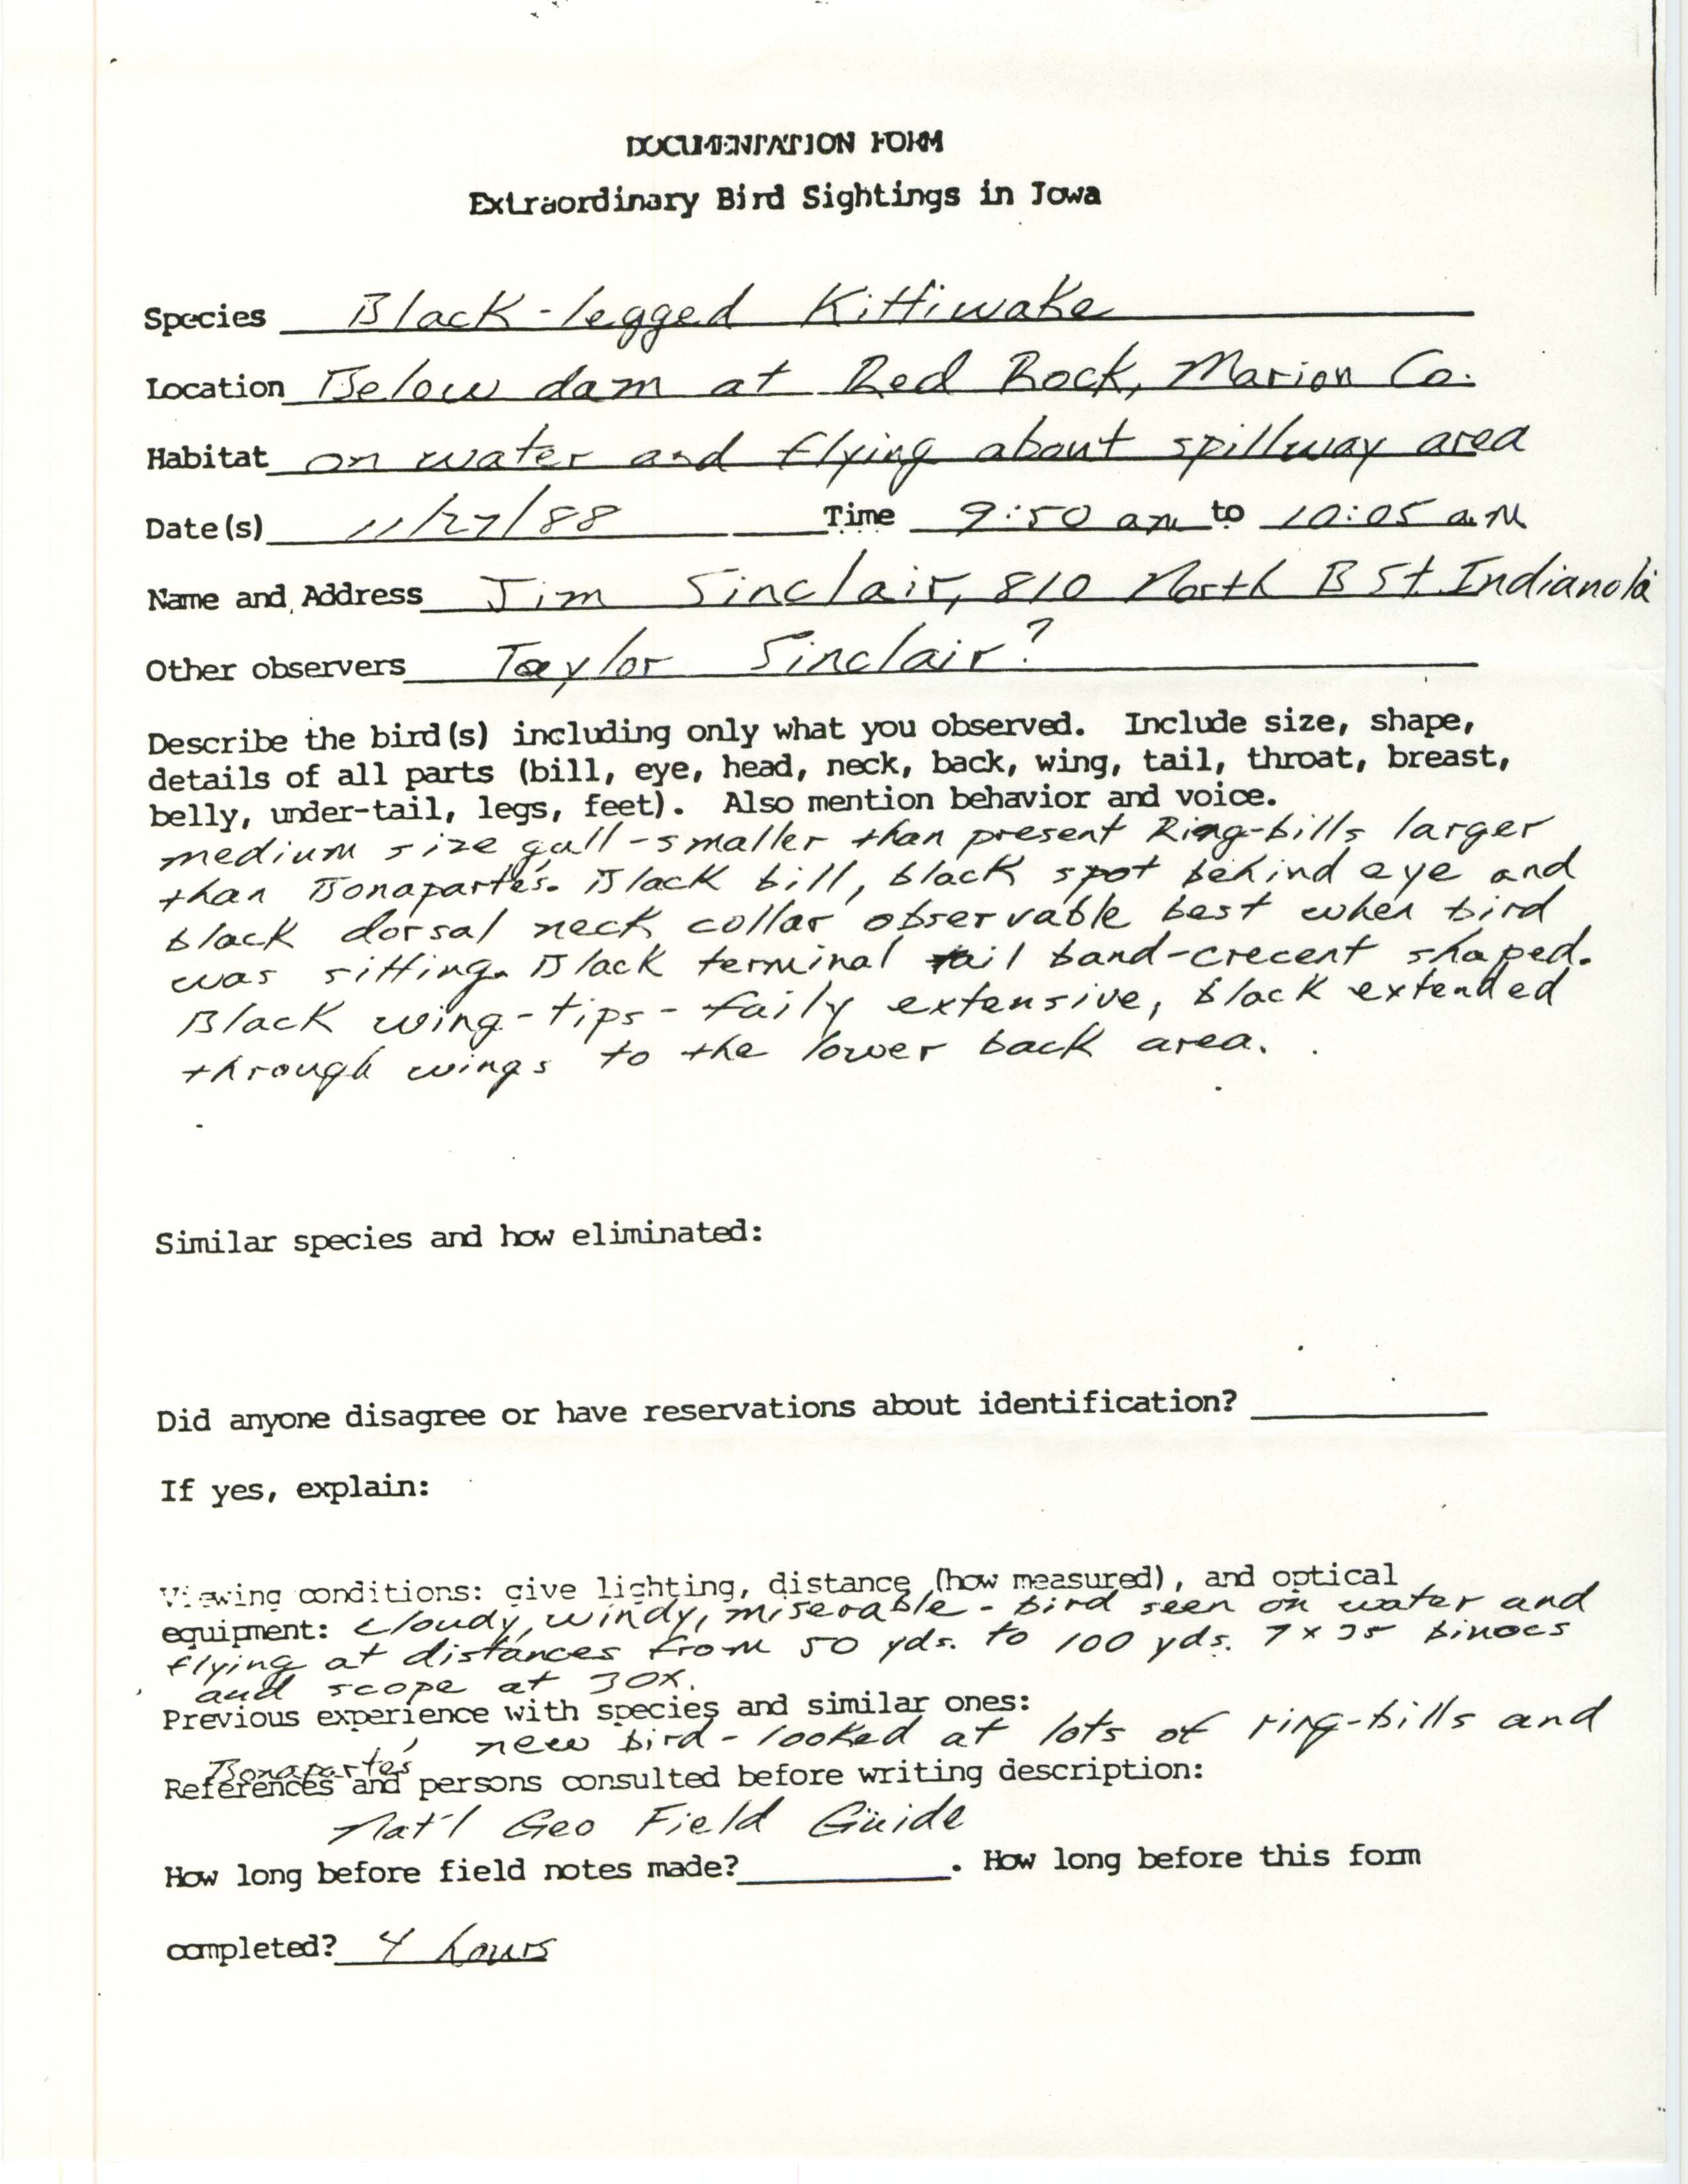 Rare bird documentation form for Black-legged Kittiwake at Red Rock Dam, 1988